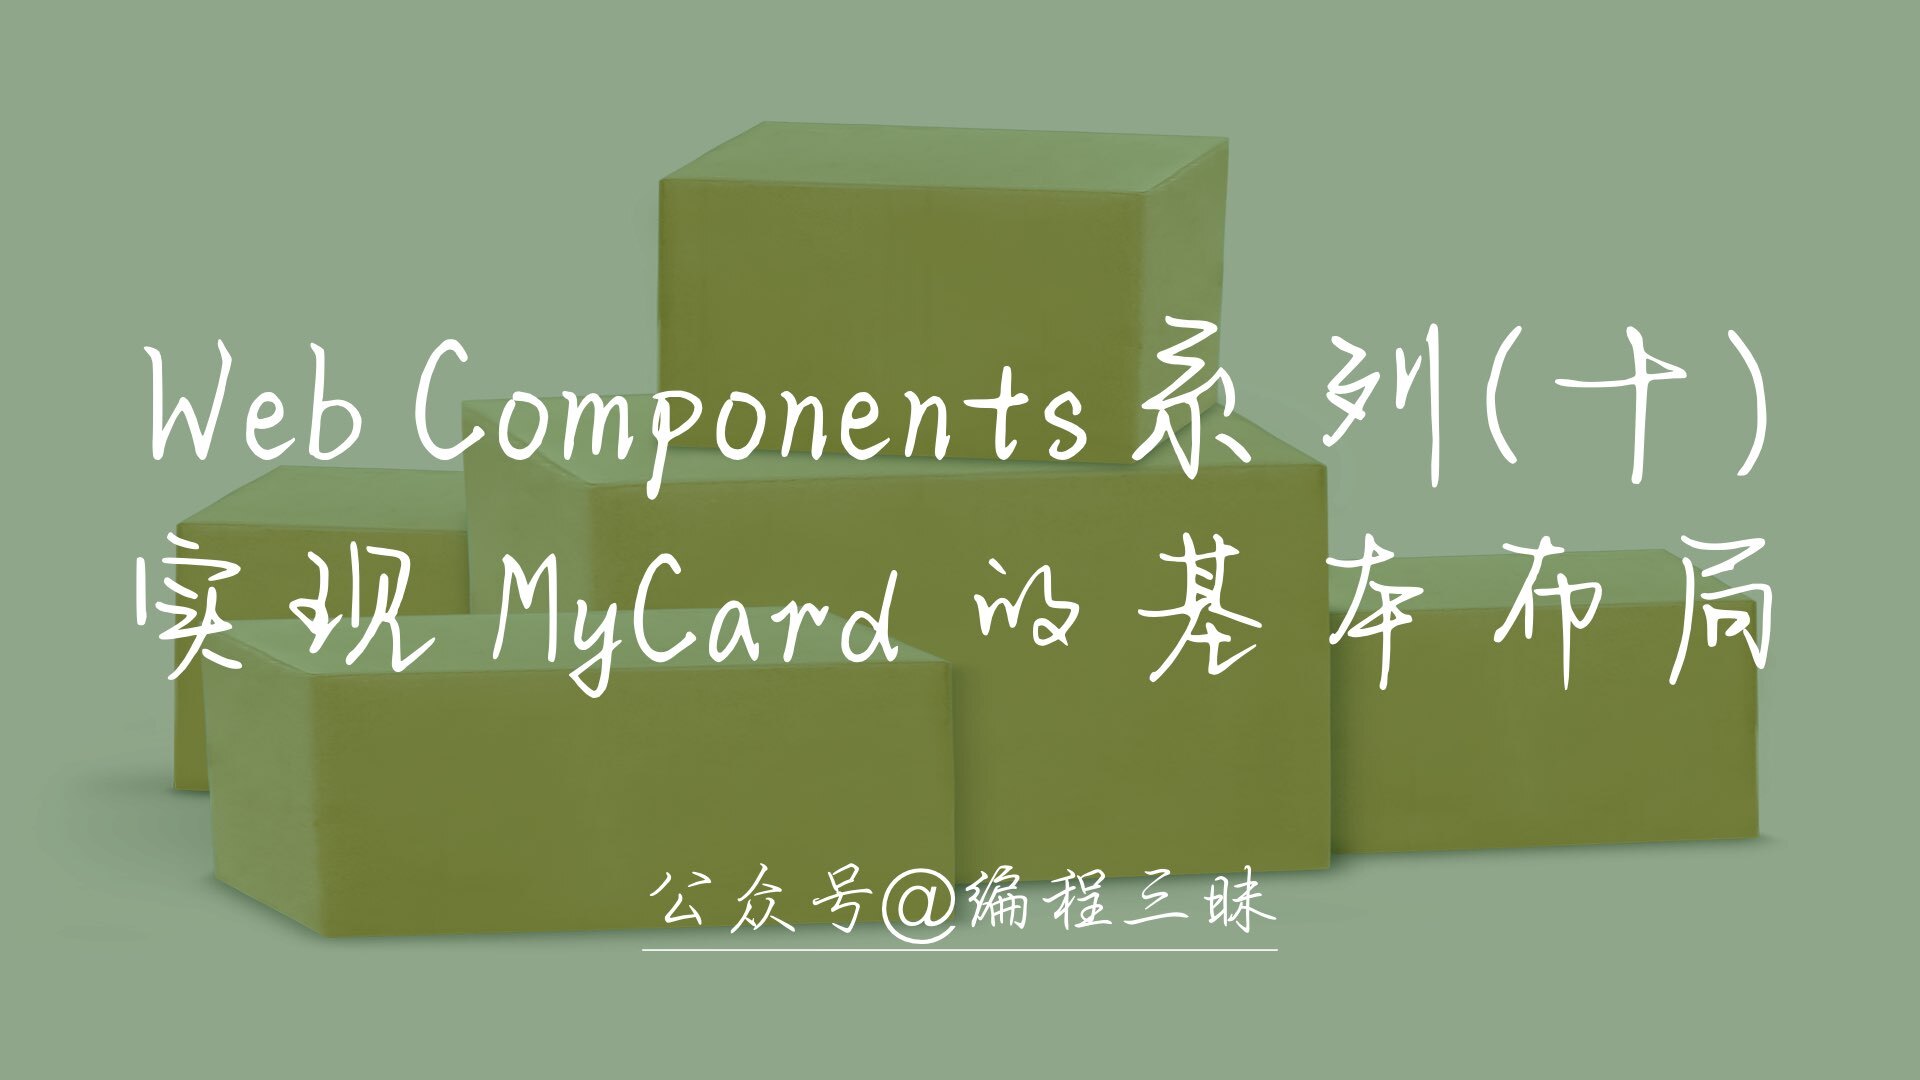 Web Components 系列（十）—— 实现 MyCard 的基本布局